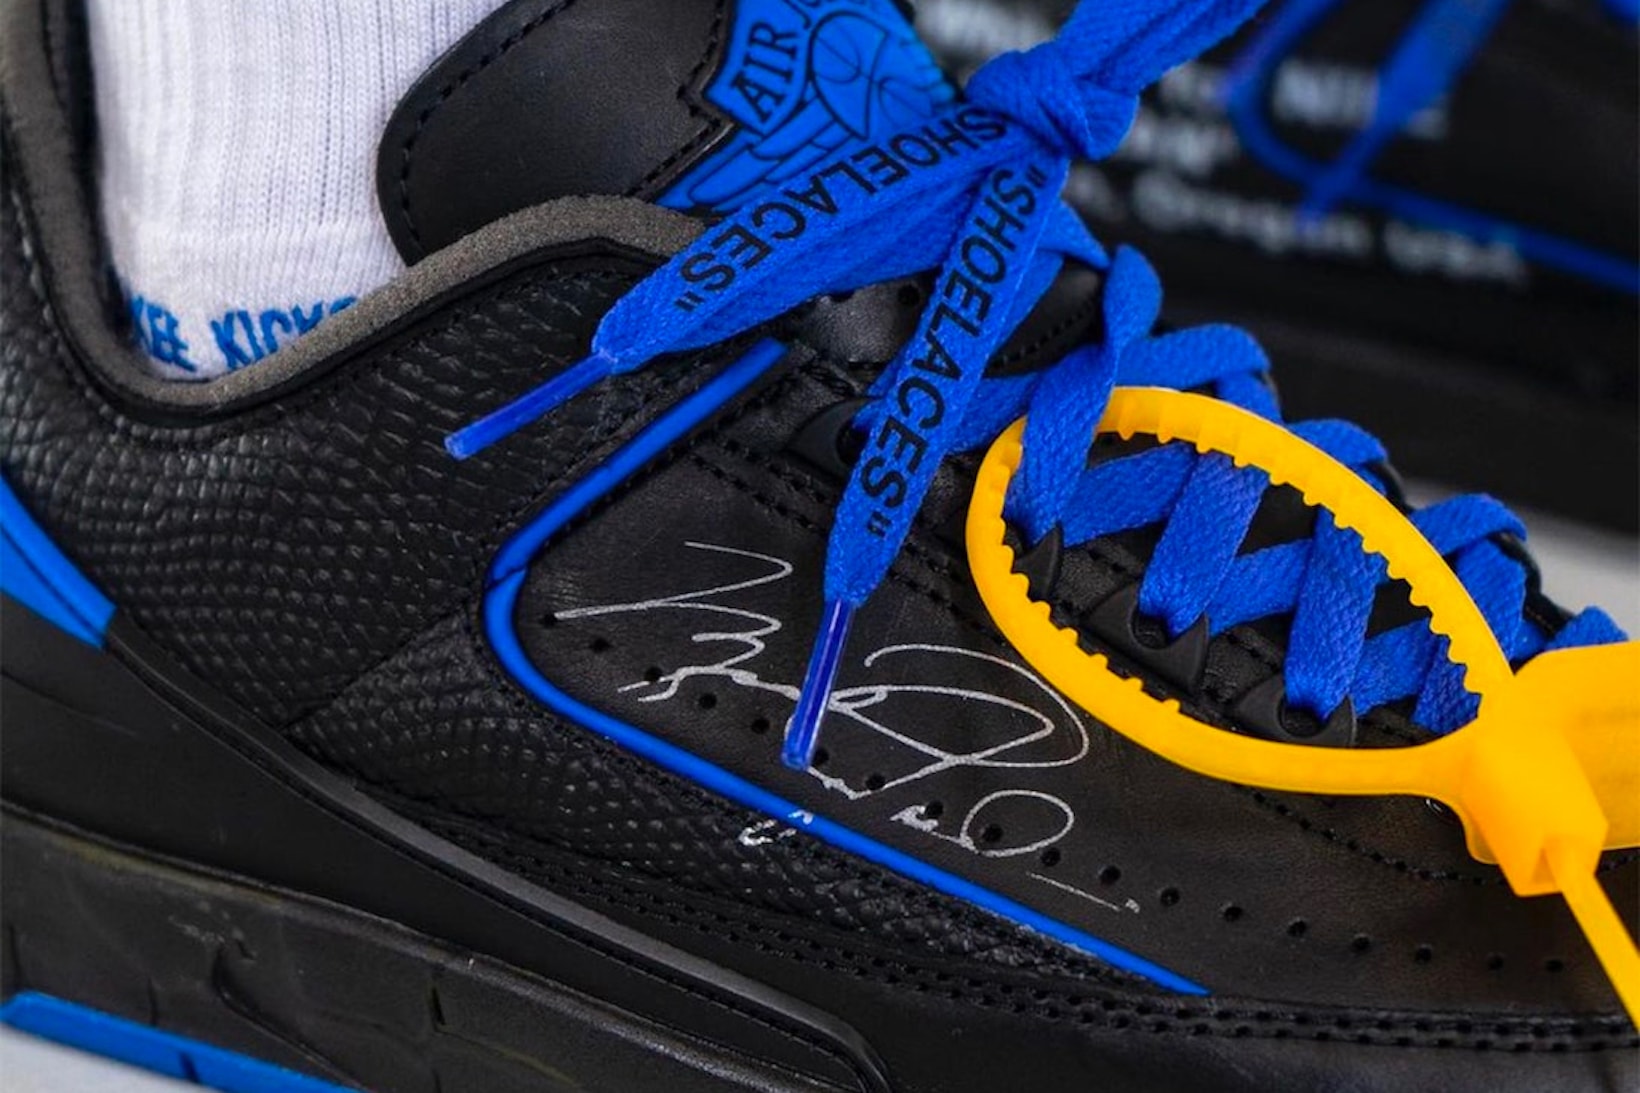 Off-White Nike Air Jordan 2 Low Black Blue Collaboration Footwear Sneakers Shoes Kicks Virgil Abloh